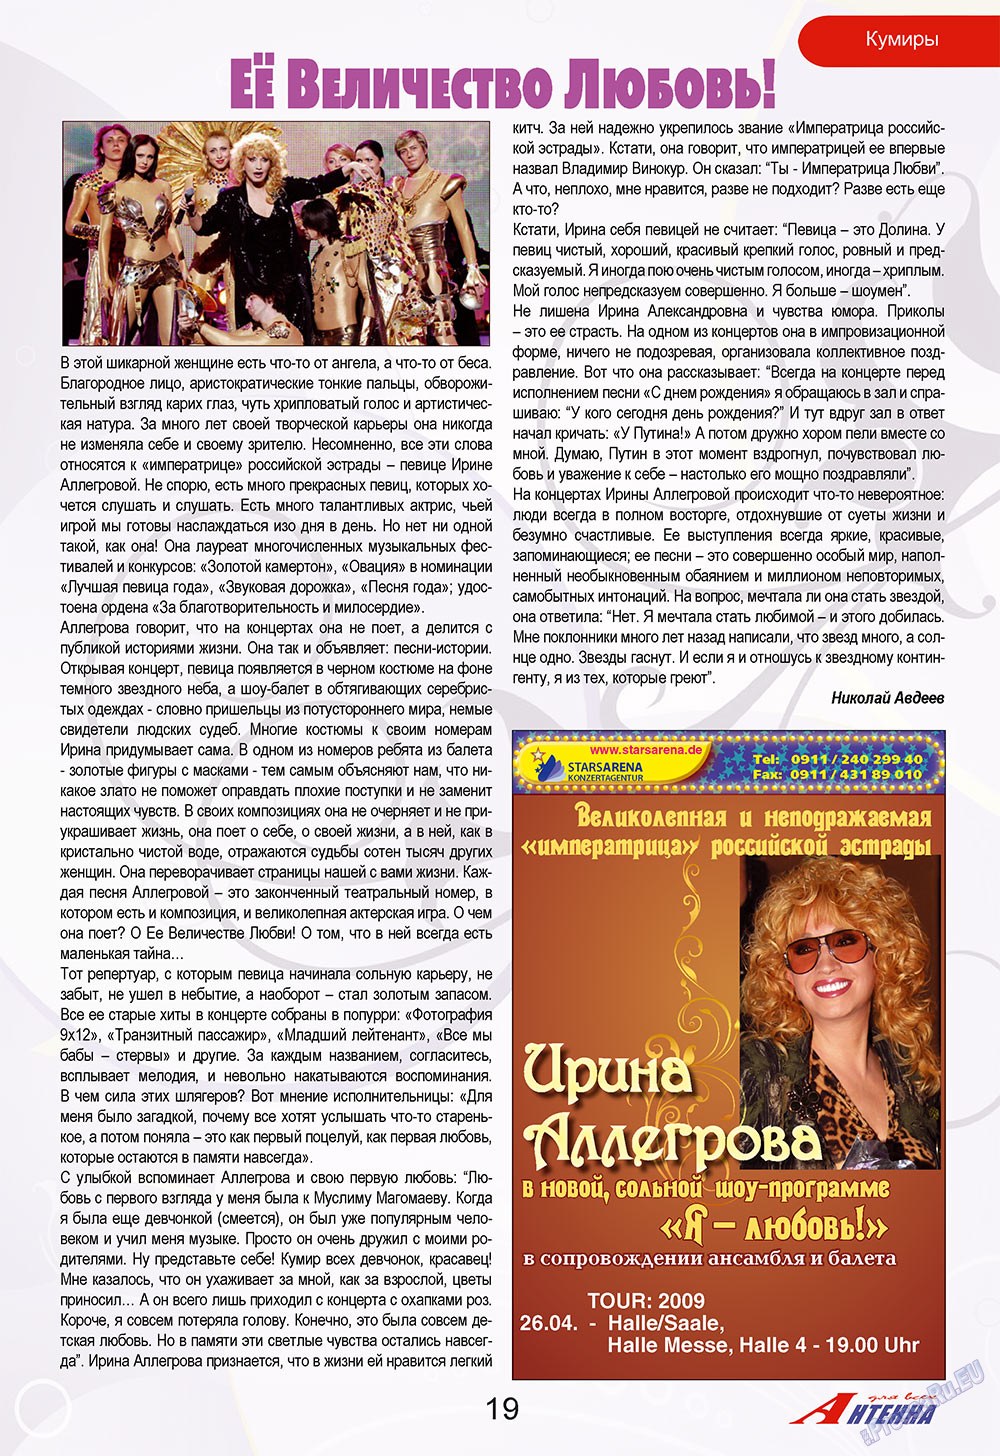 Антенна (журнал). 2009 год, номер 4, стр. 19